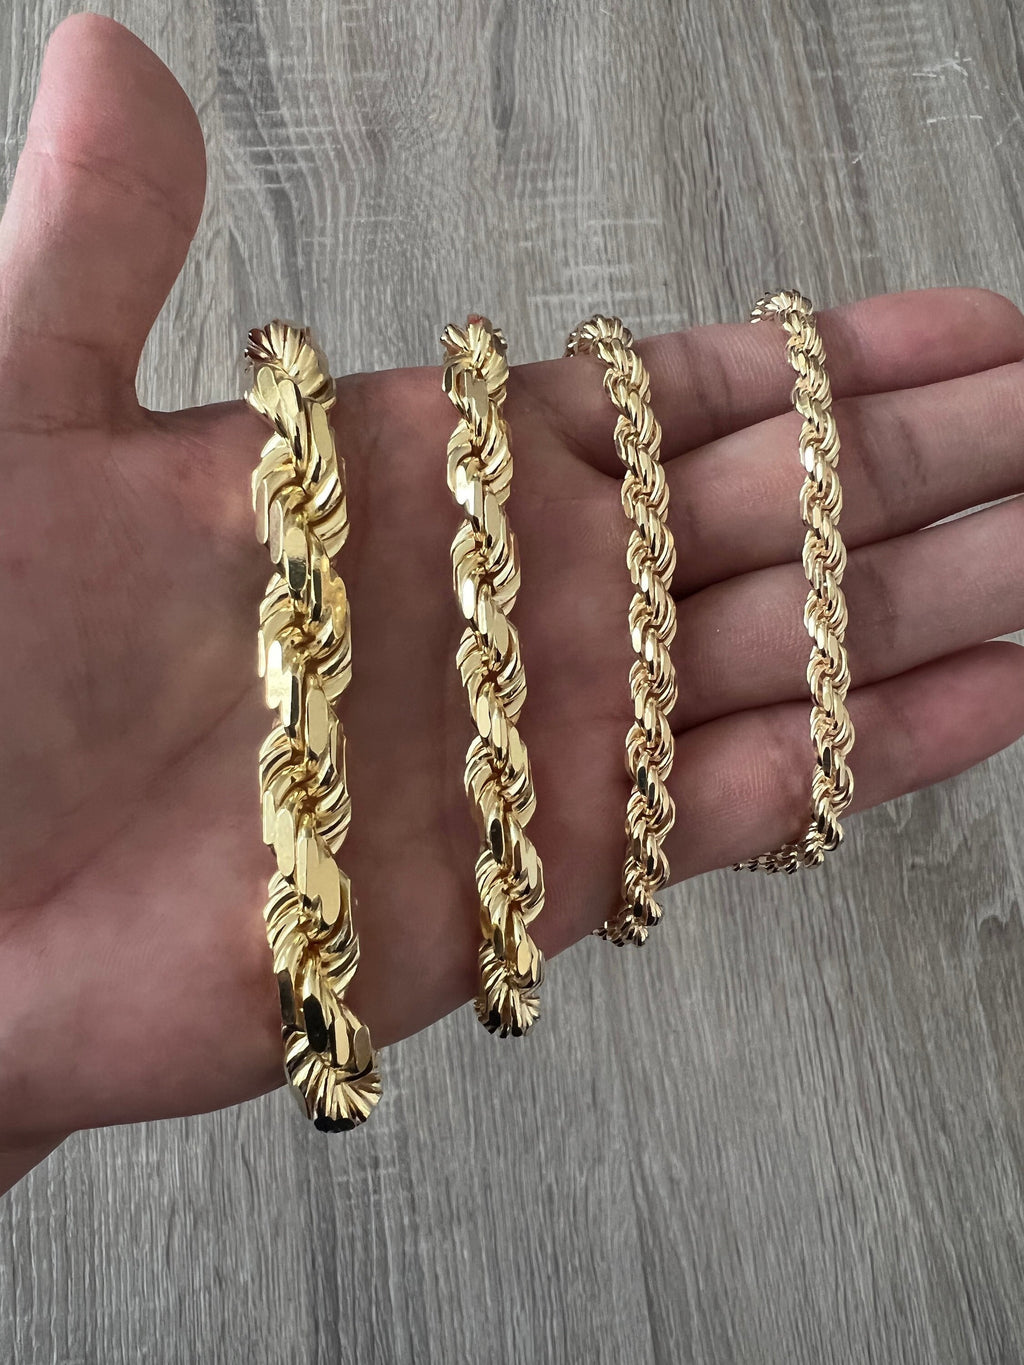 Italian Gold Diamond Cut Rope Chain Bracelet (4mm) in 14k Gold